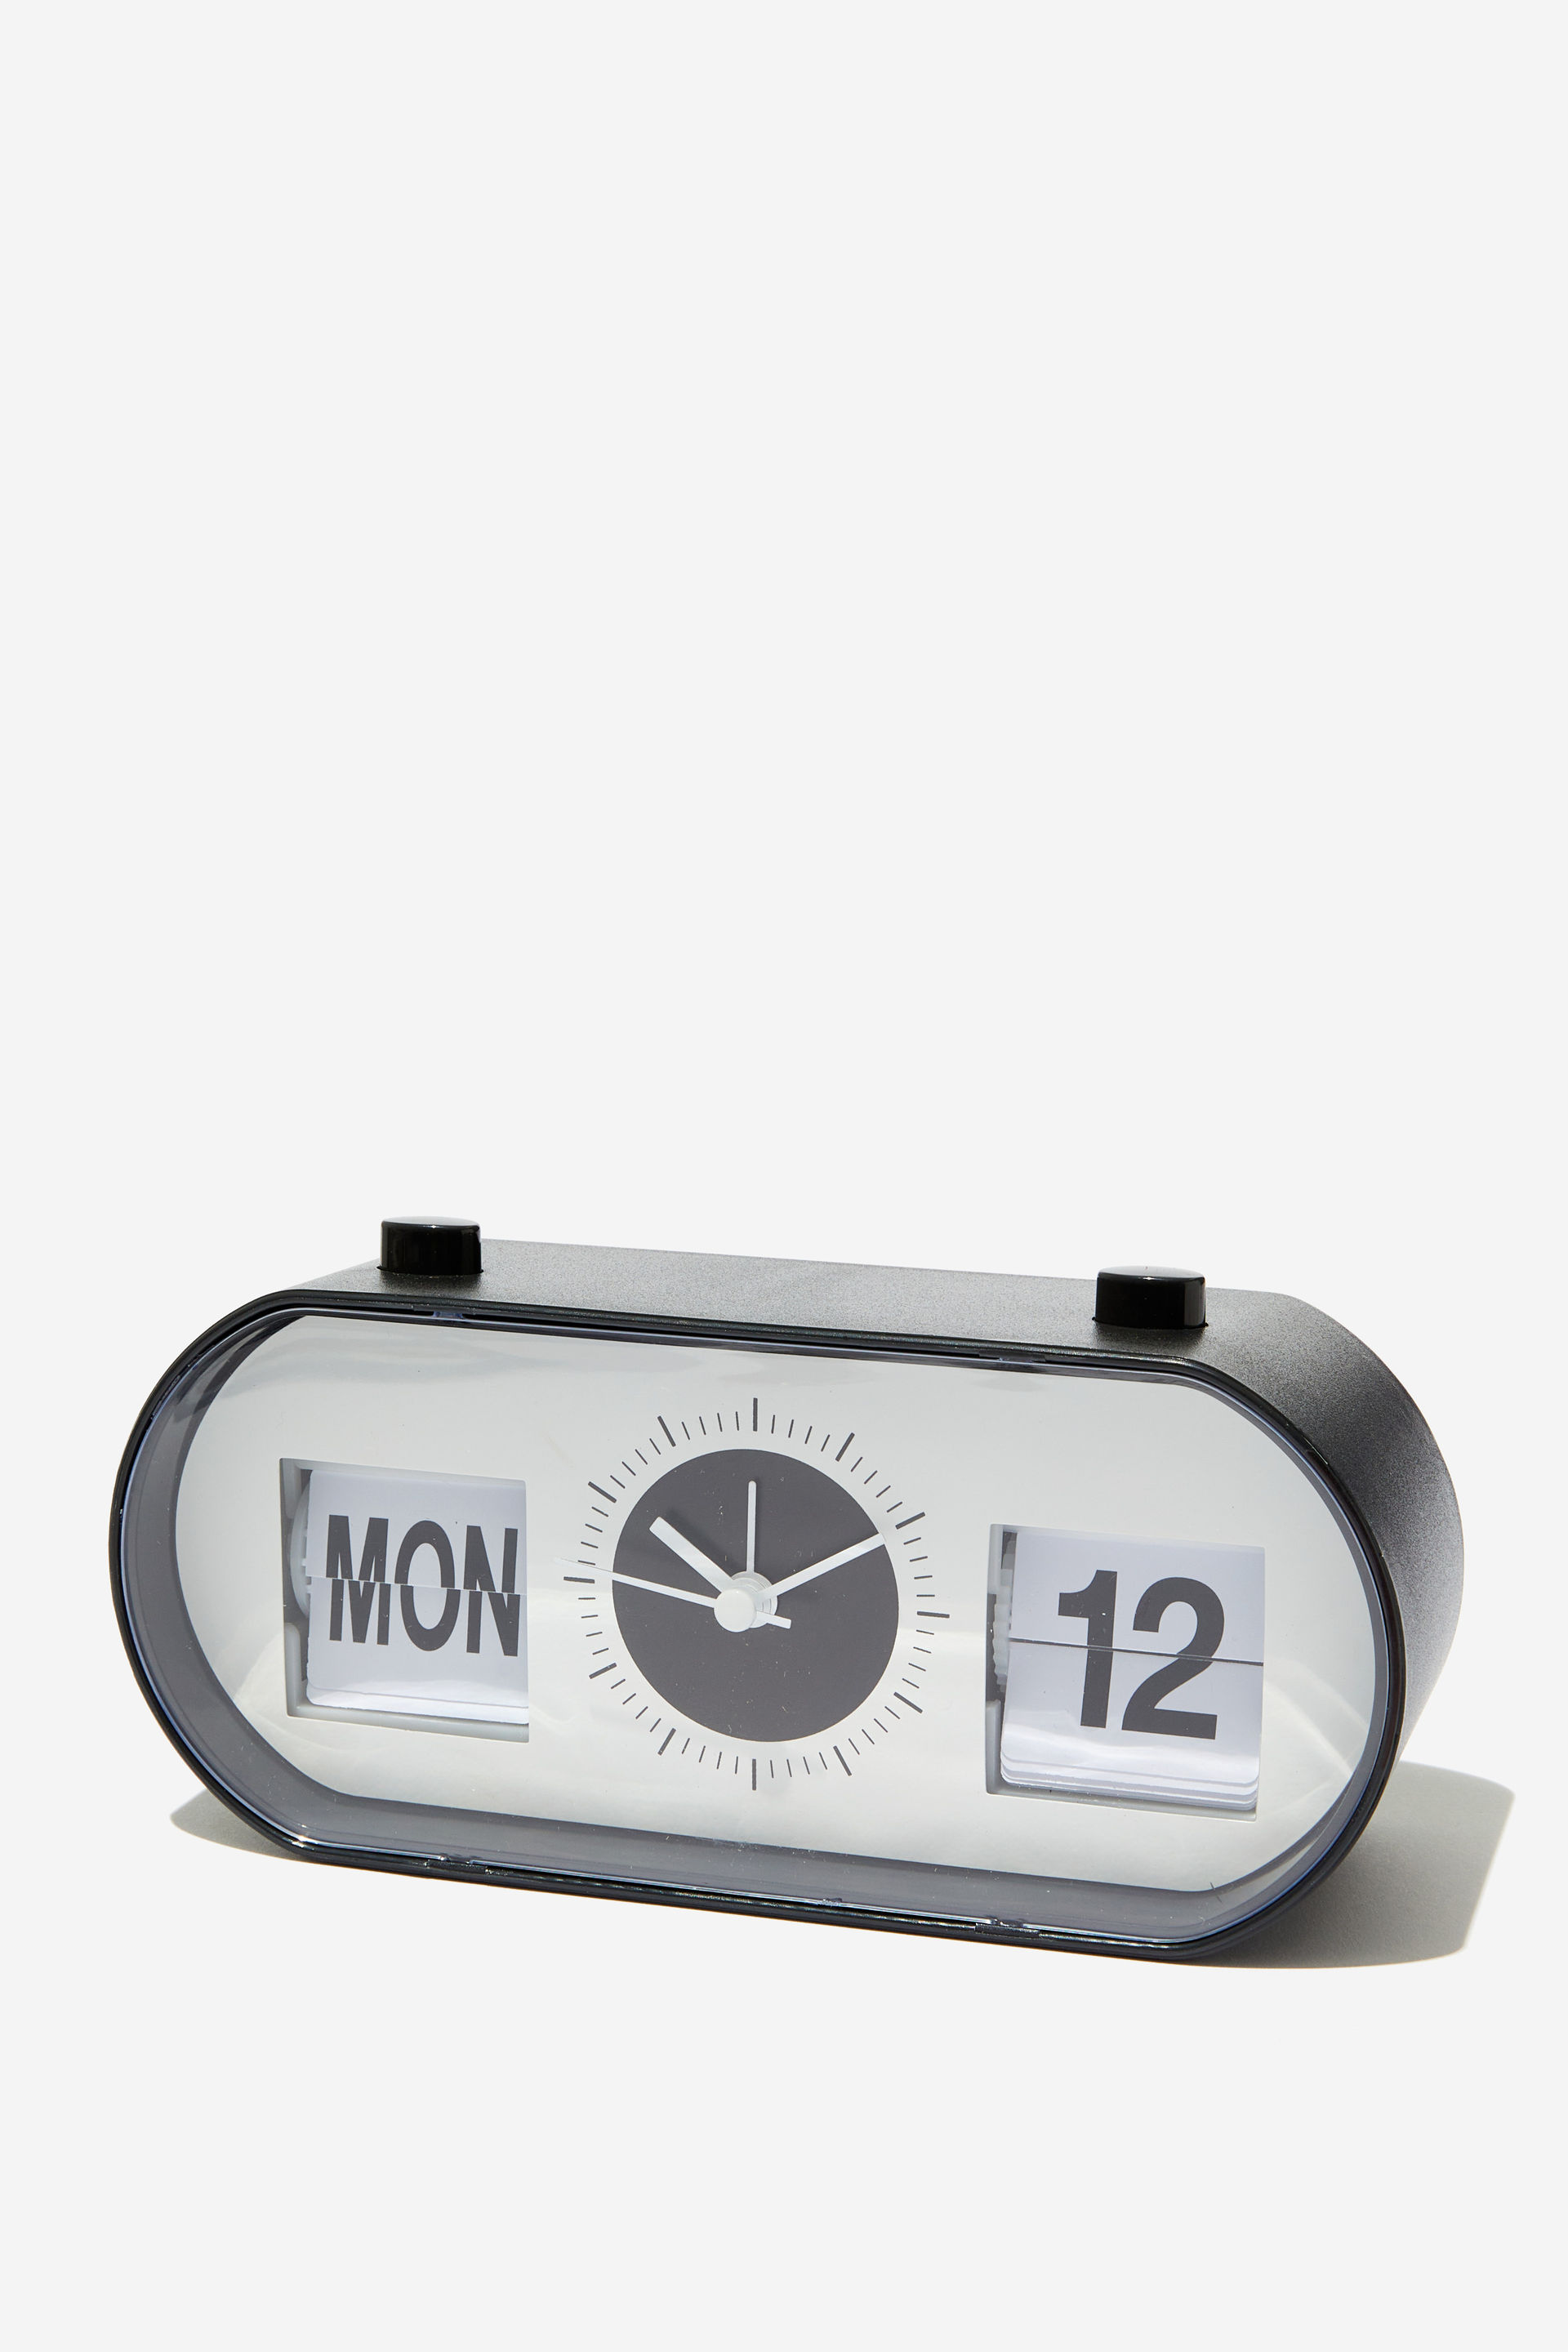 Typo - Flip Clock V2.0 - Black